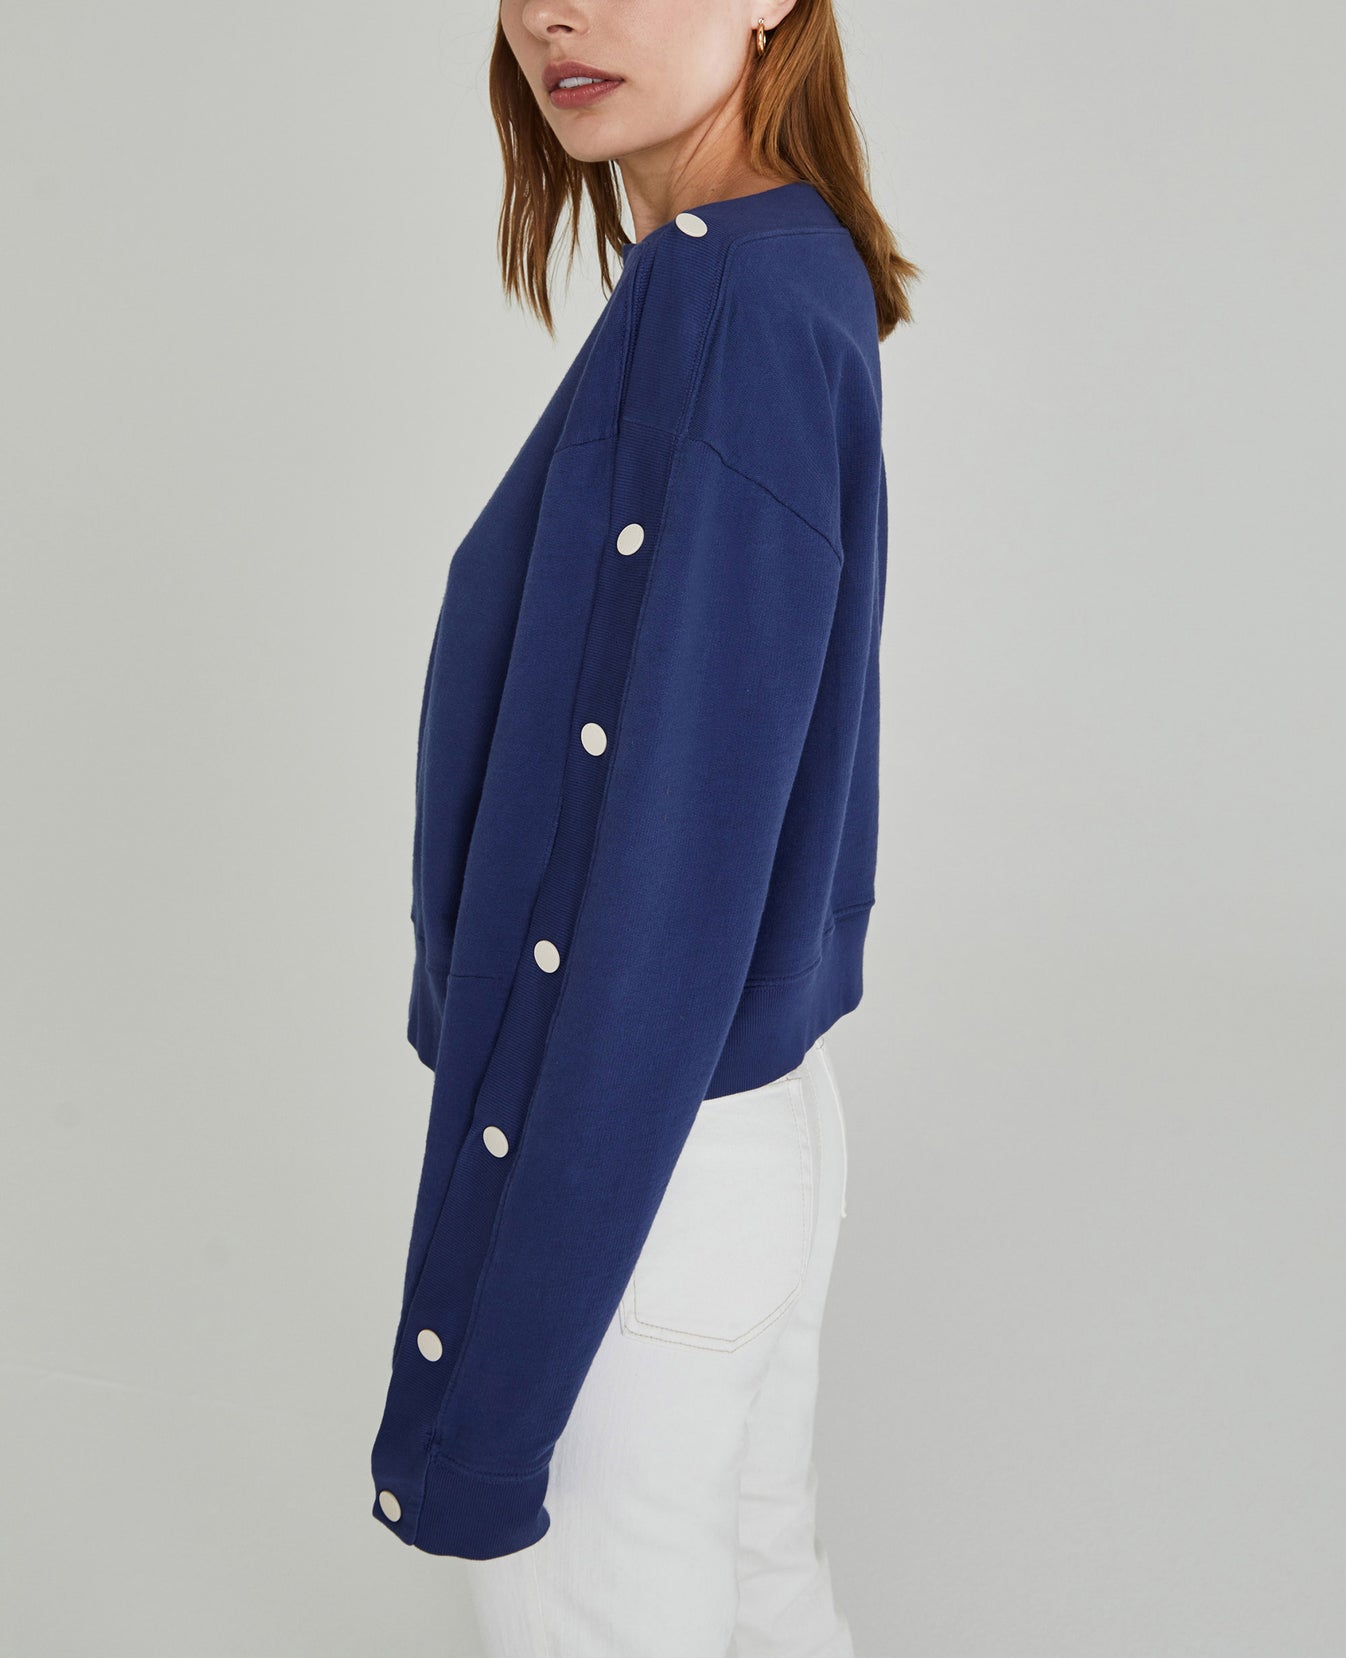 Cyra Sweatshirt Bright Indigo Snap Button Sweatshirt Women Tops Photo 5